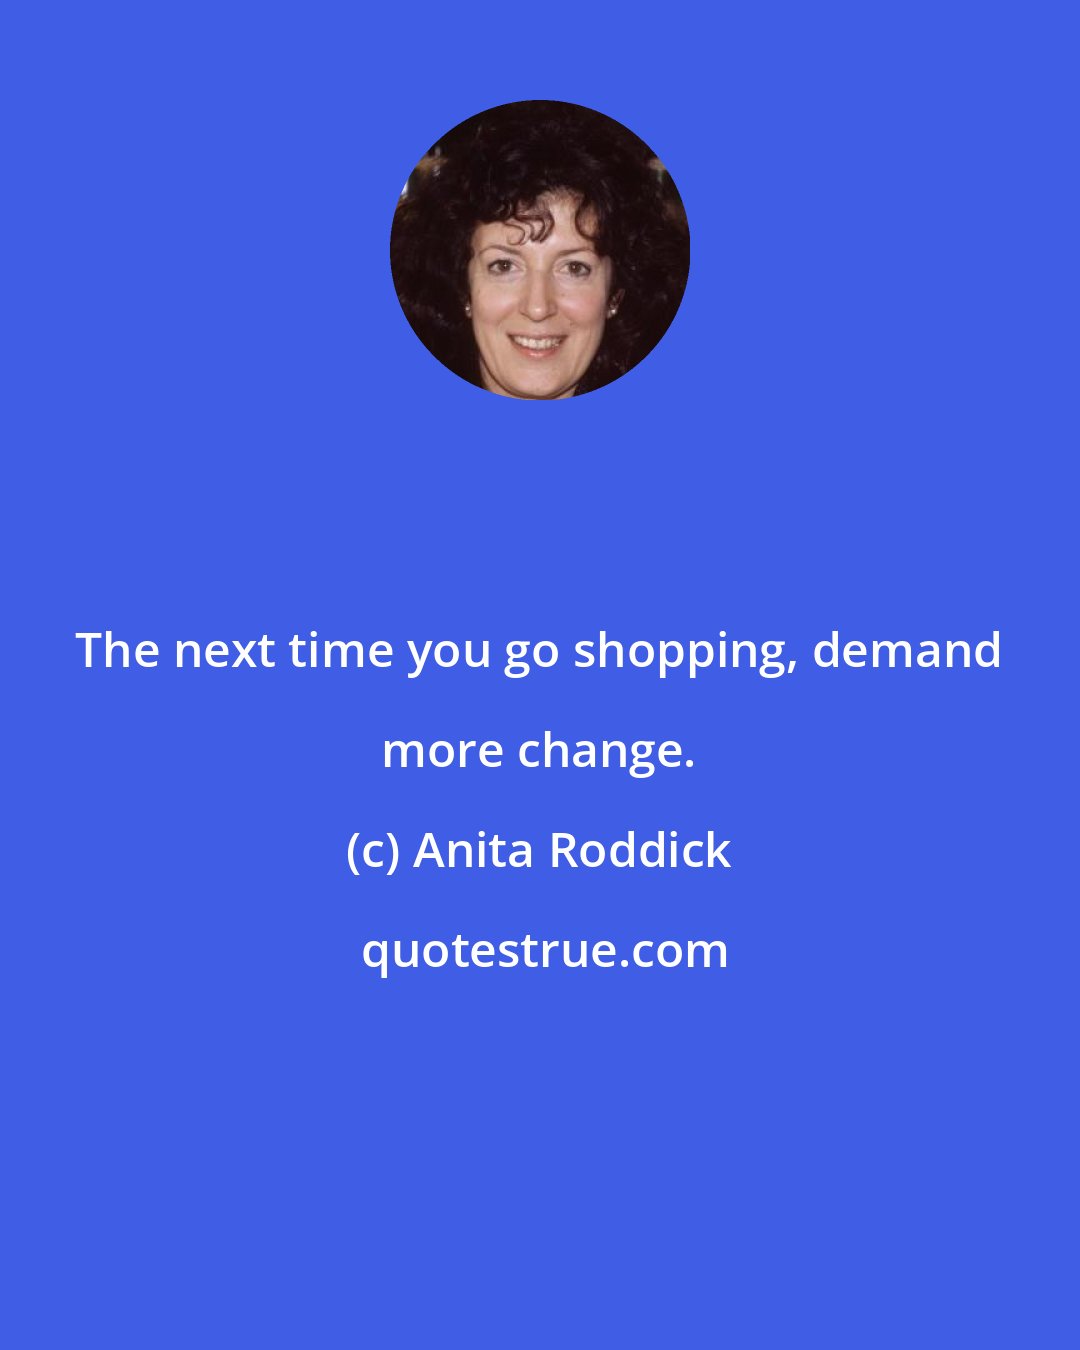 Anita Roddick: The next time you go shopping, demand more change.